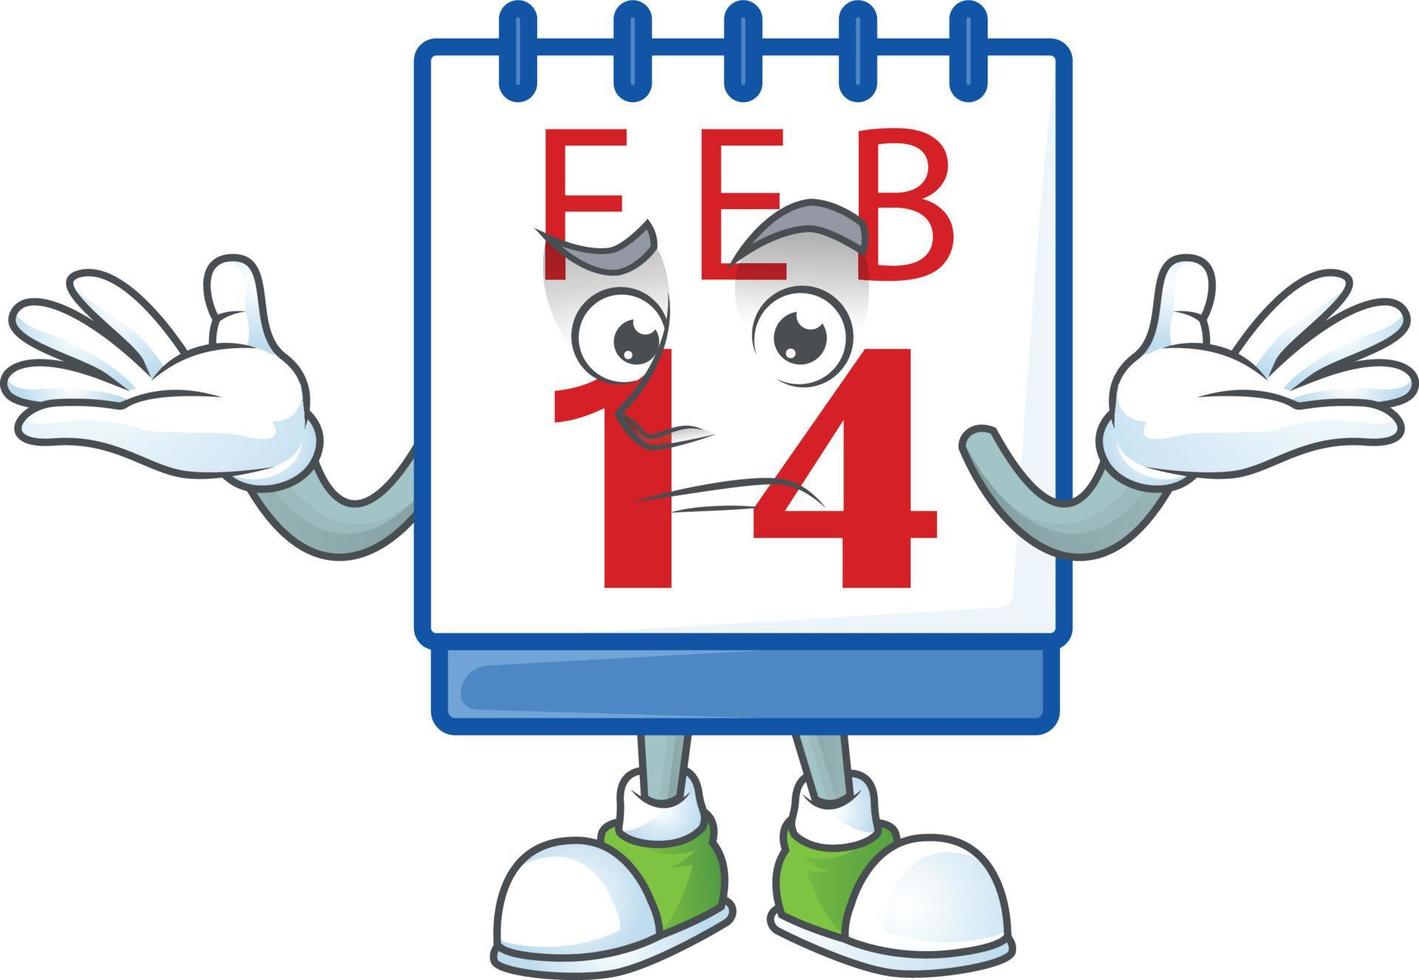 14th valentine calendar cartoon character style vector